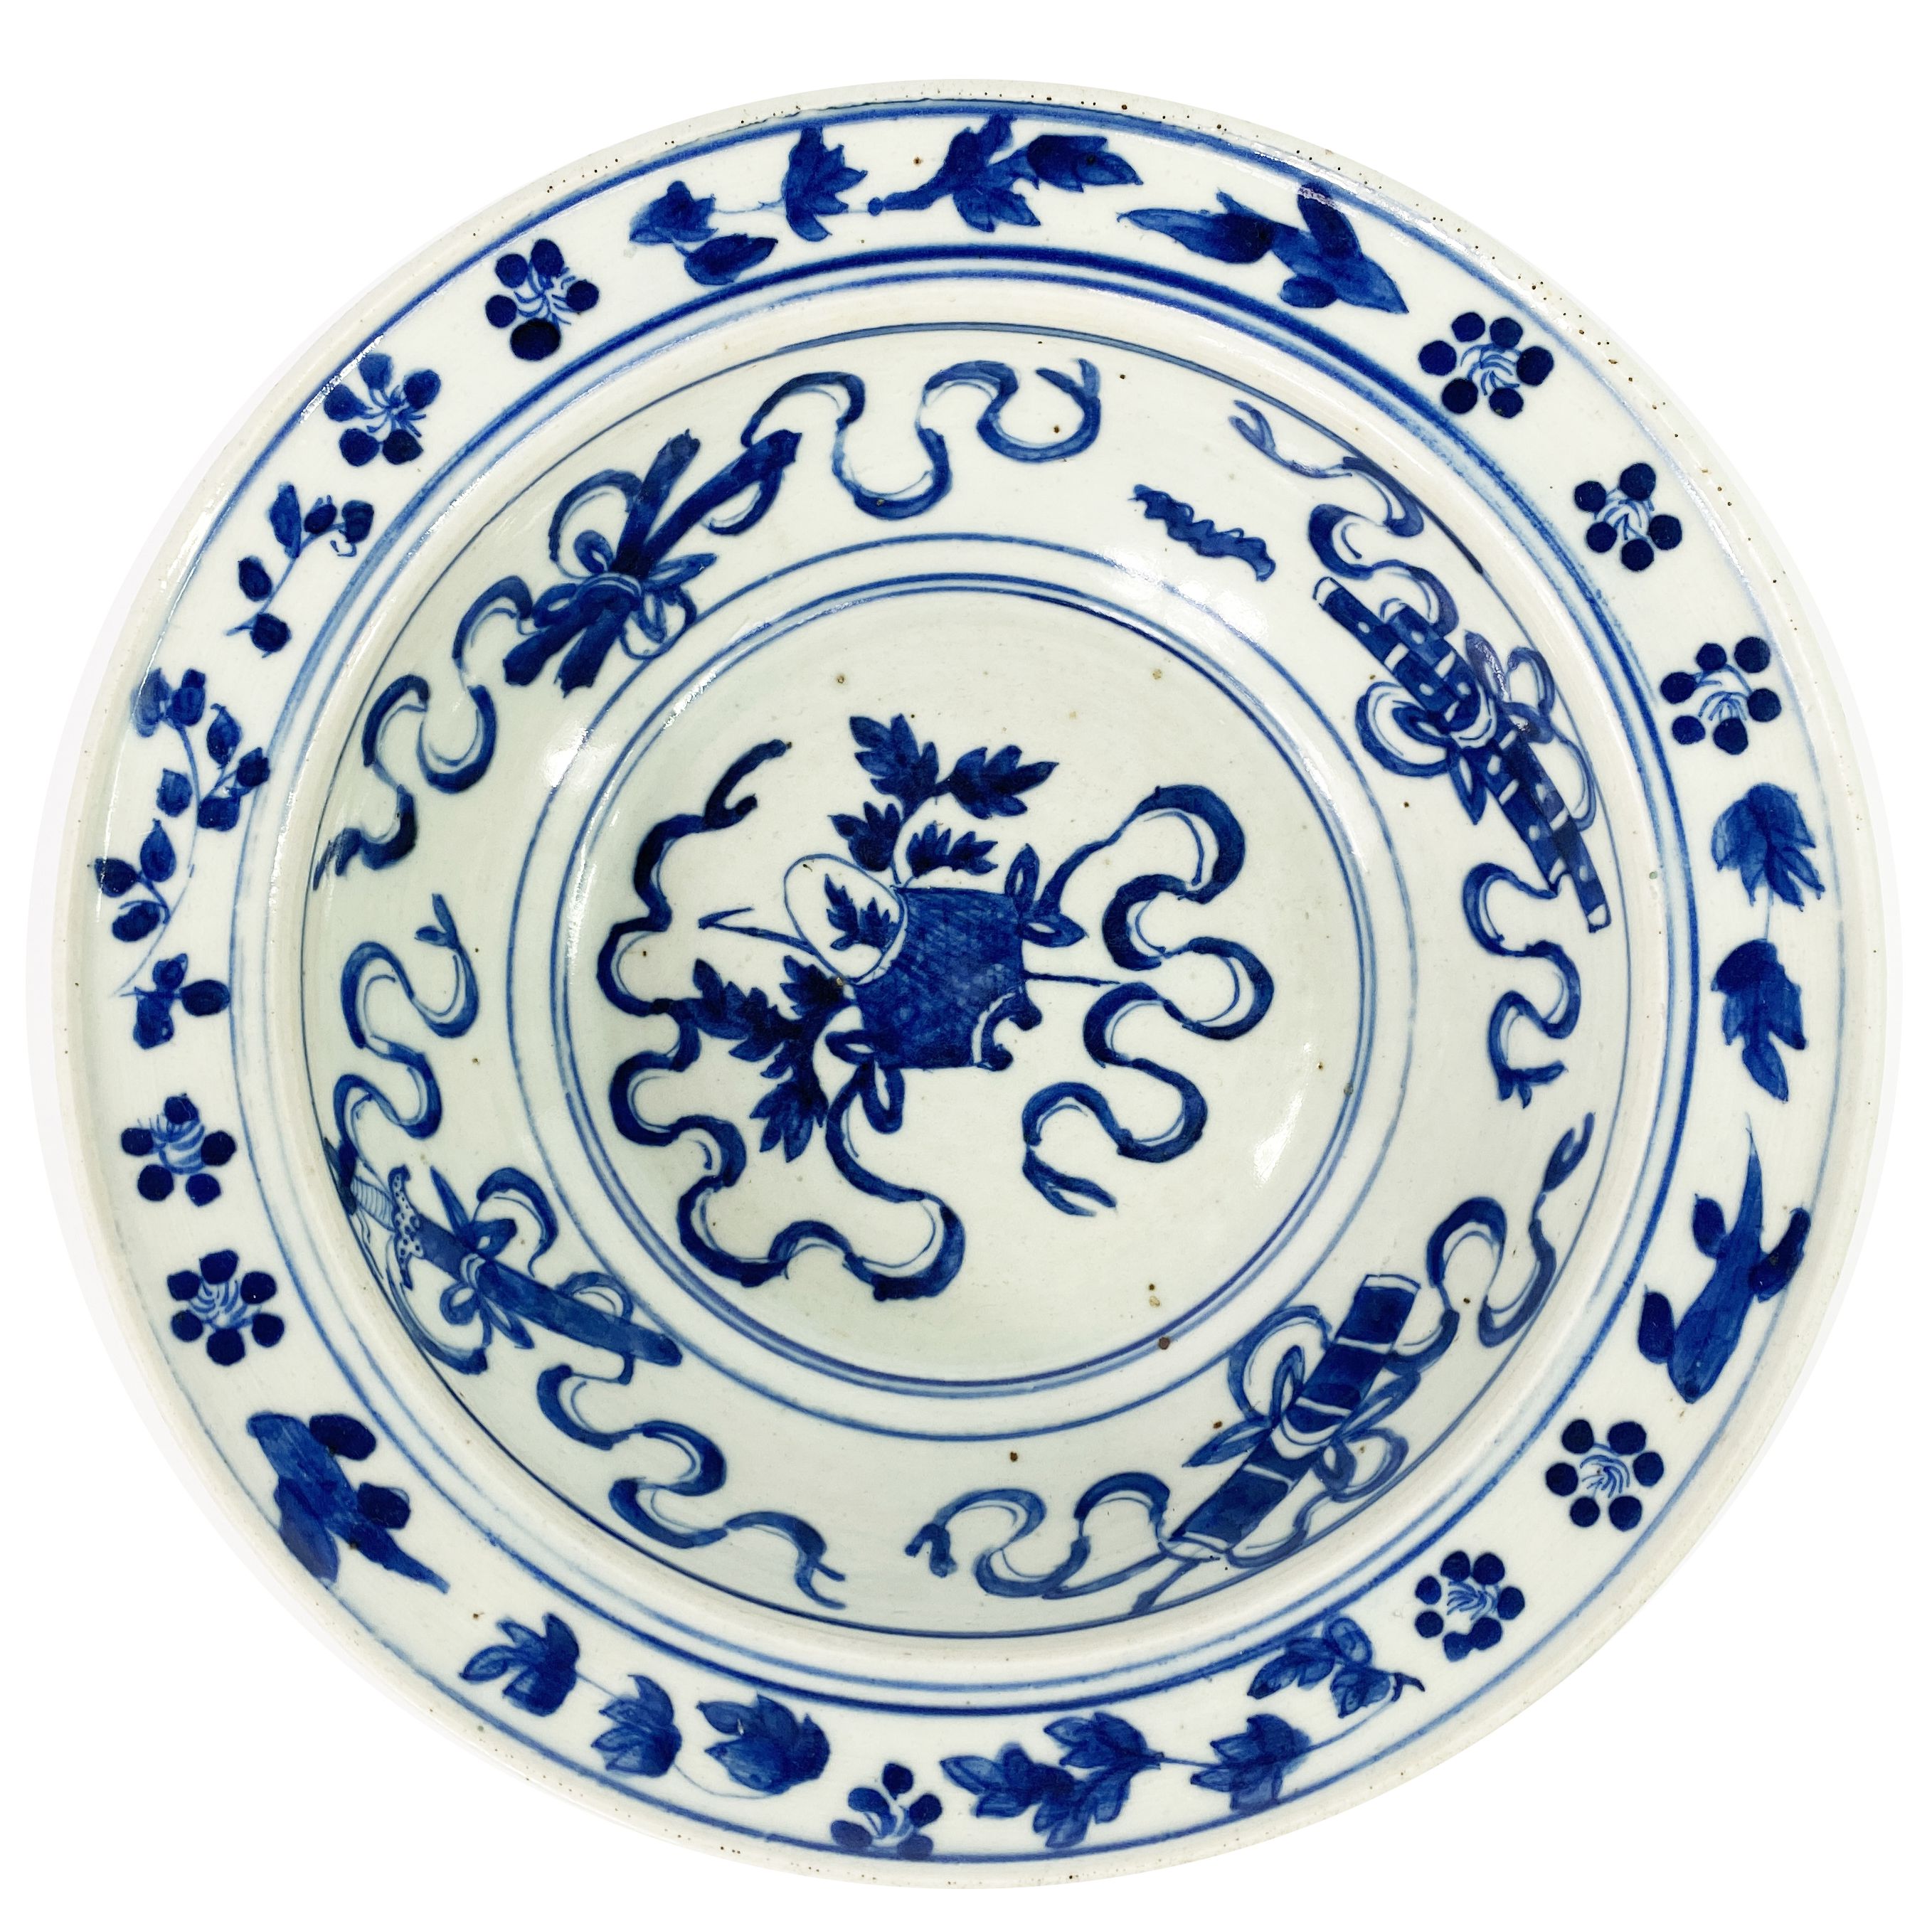 China (19th century), Decorative porcelain dish